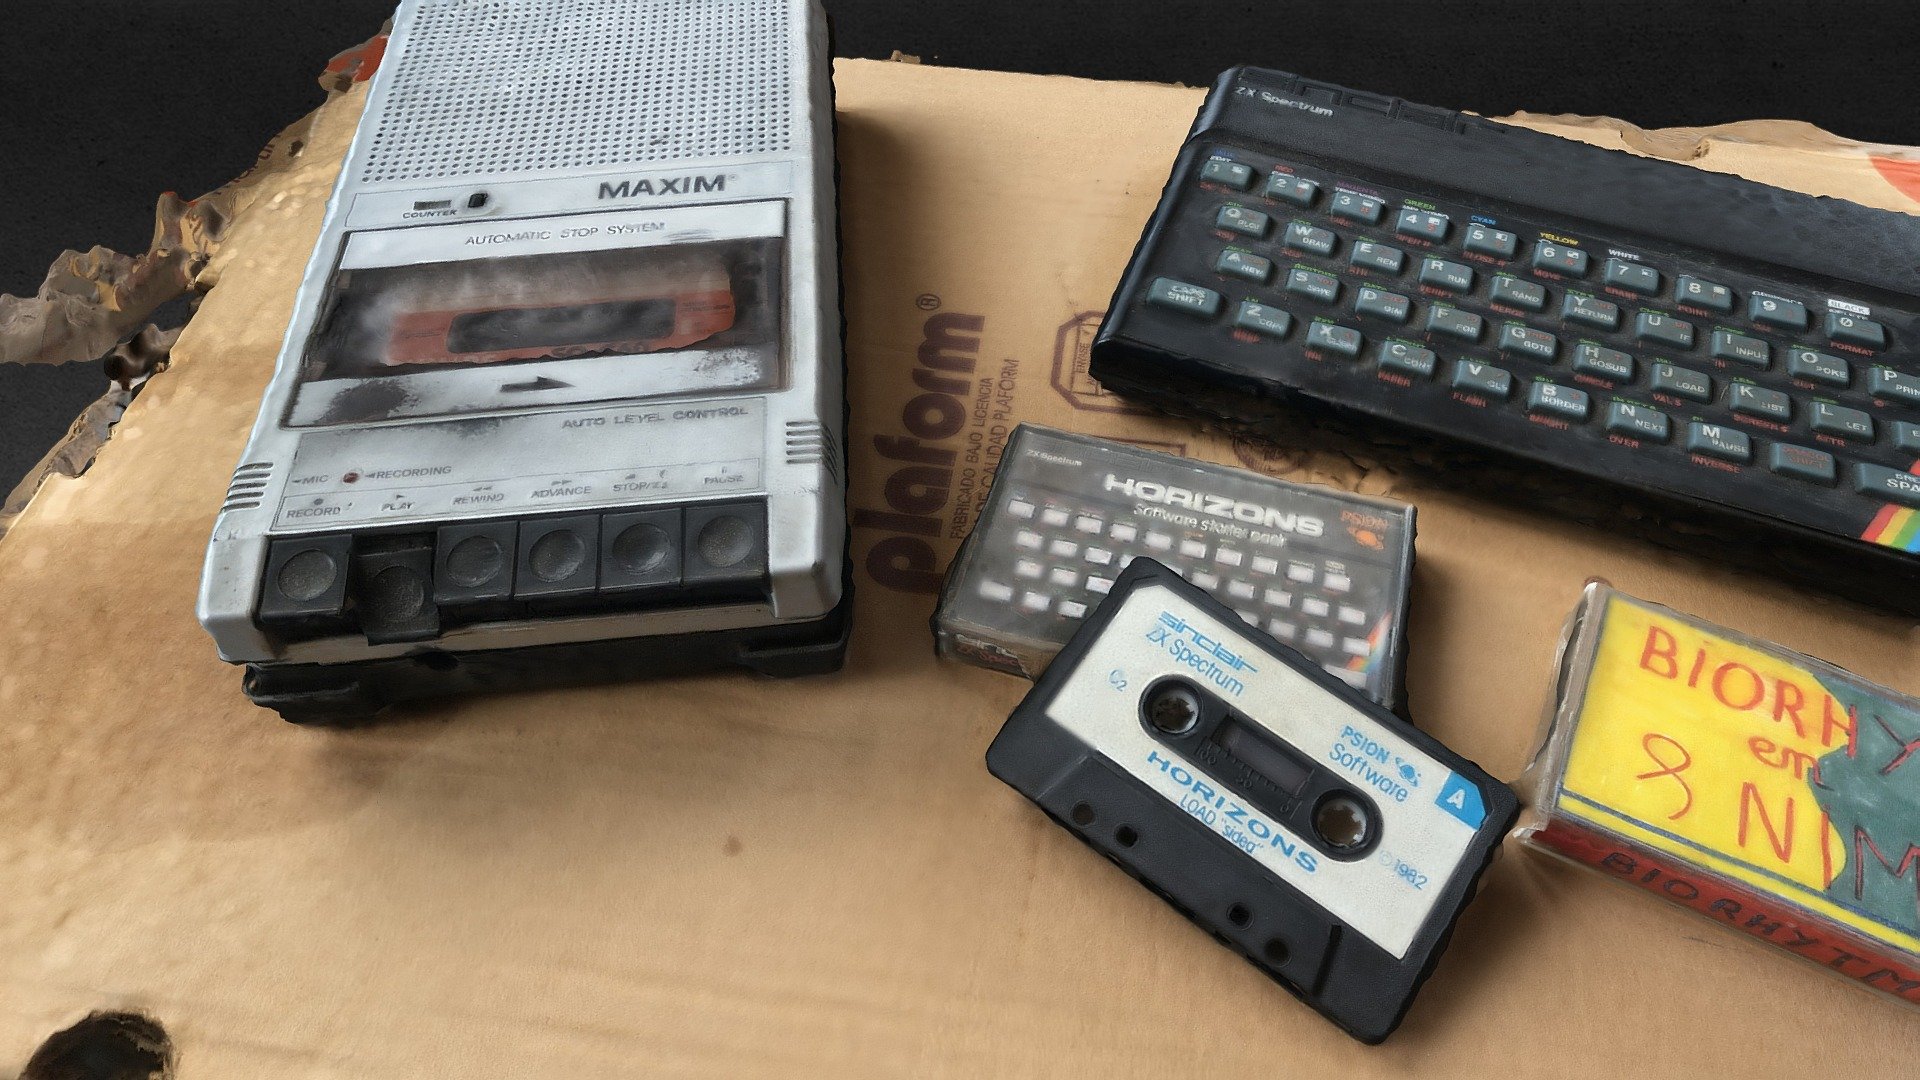 My old ZX Spectrum